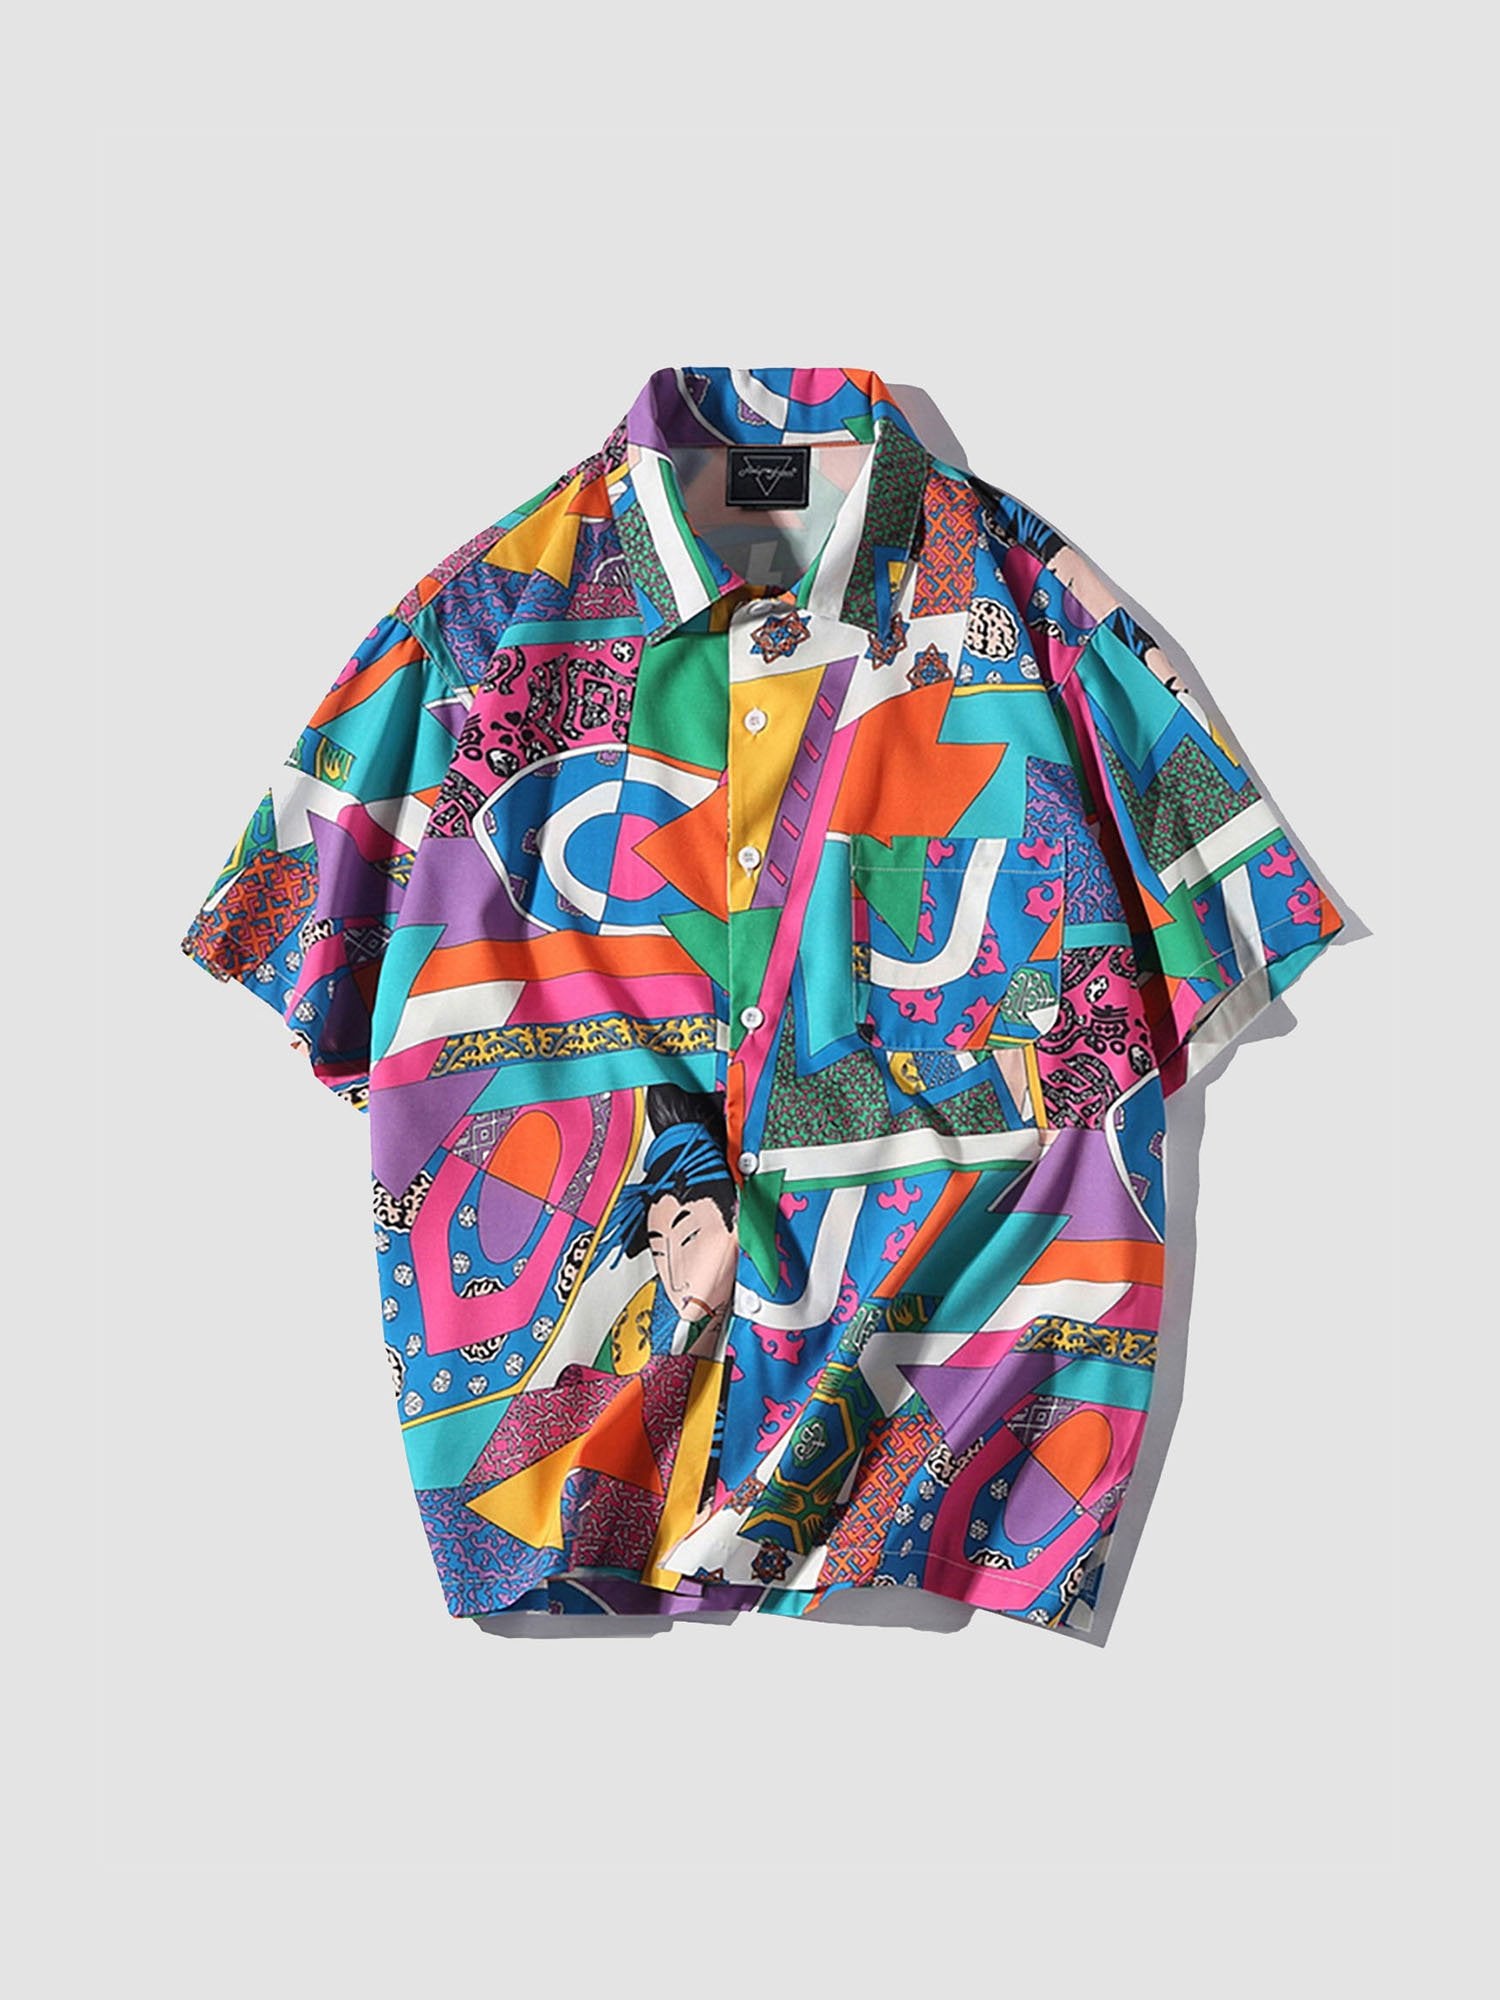 JUSTNOTAG Japanese Ukiyoe Print Short Sleeve Shirts